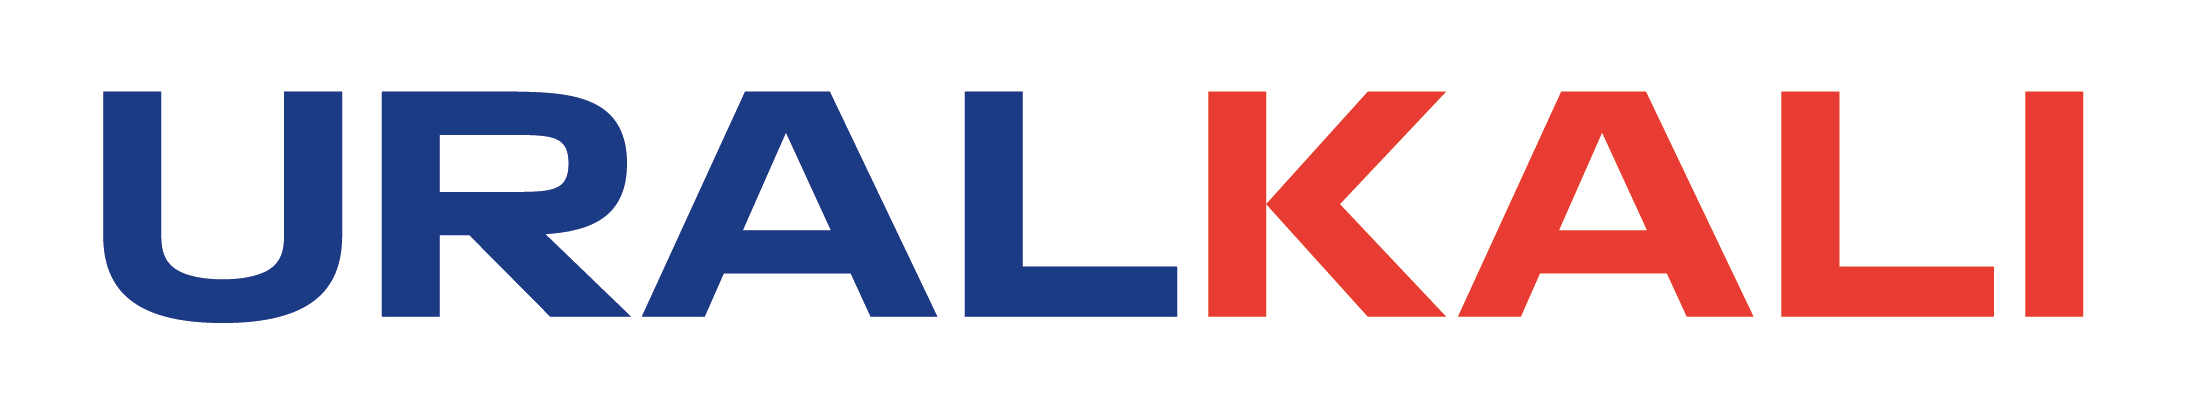 Uralkali logo